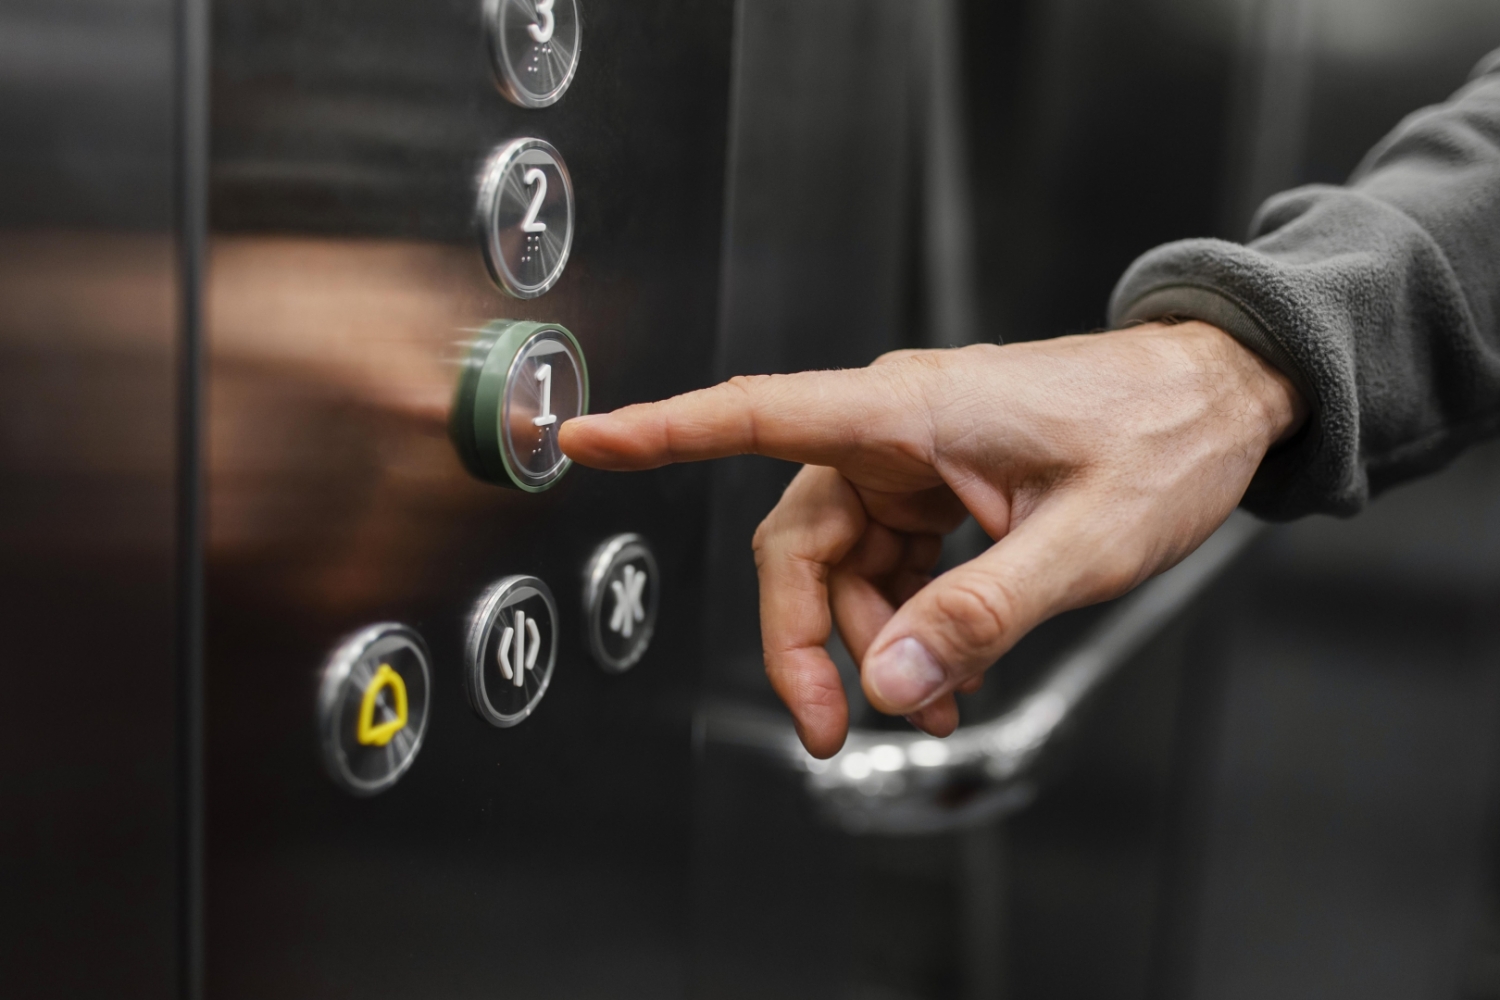 Cilvēka roka nospiež lifta pogu